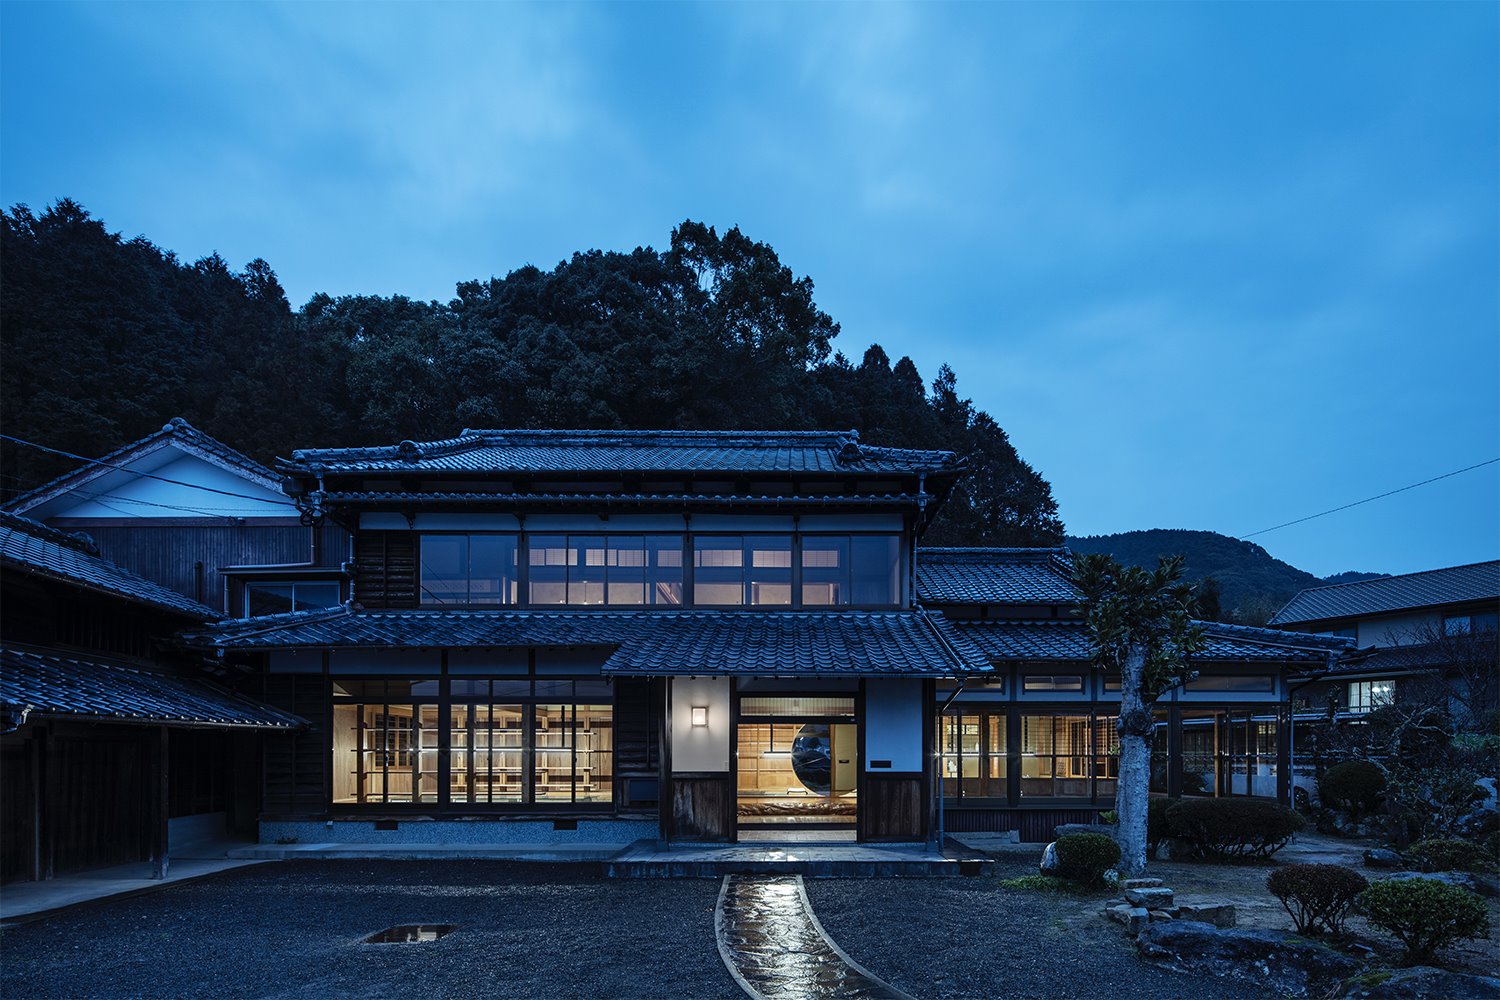 oficinas arquitectura tradicional japonesa interiorismo contemporaneo 7